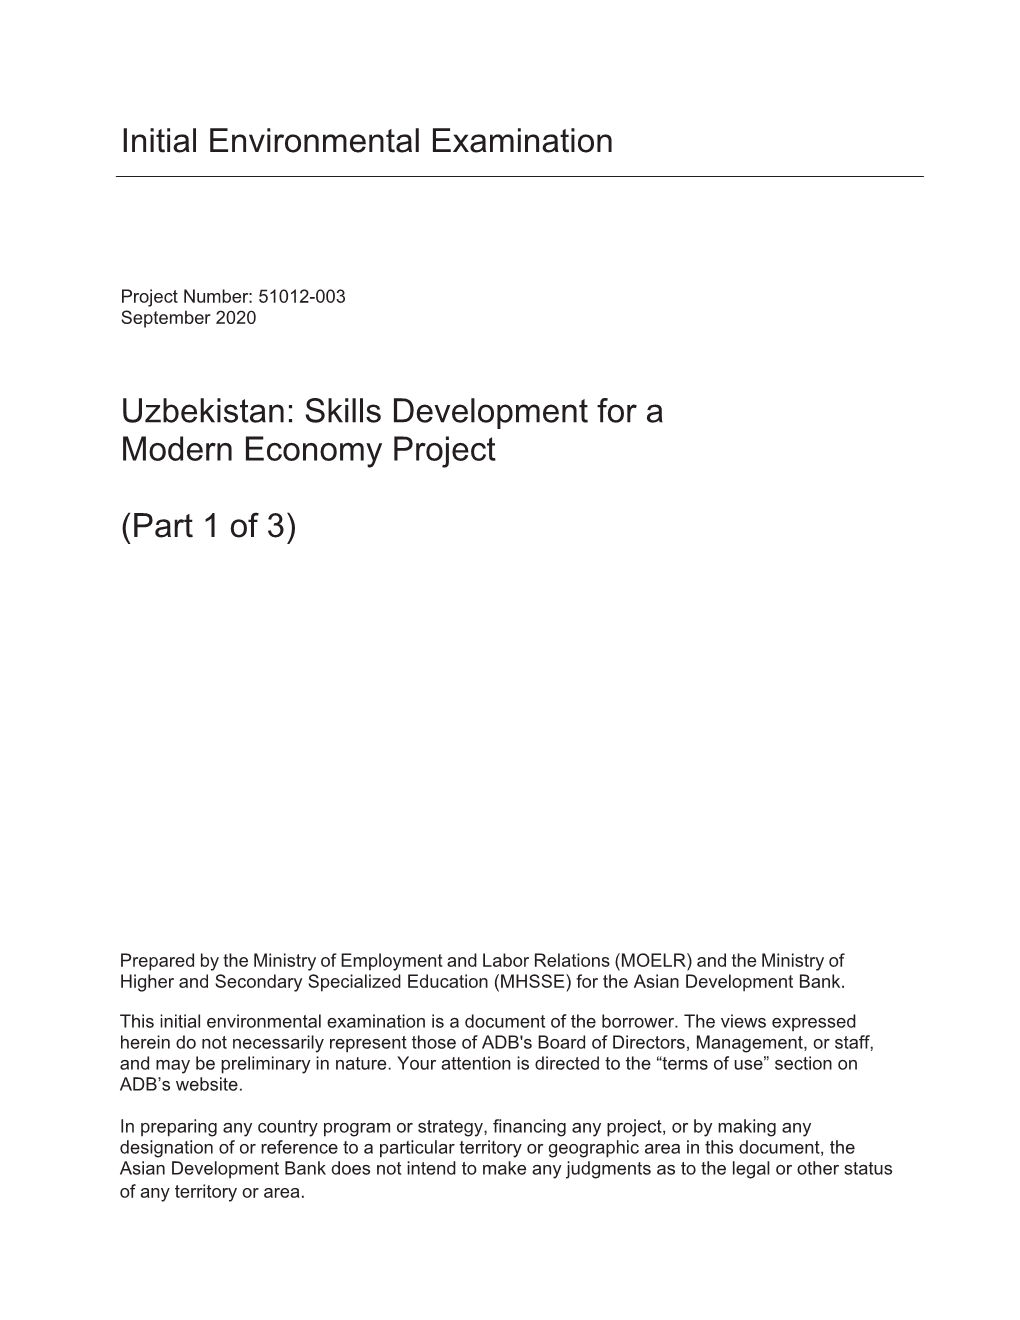 Initial Environmental Examination Uzbekistan: Skills Development for a Modern Economy Project (Part 1 of 3)